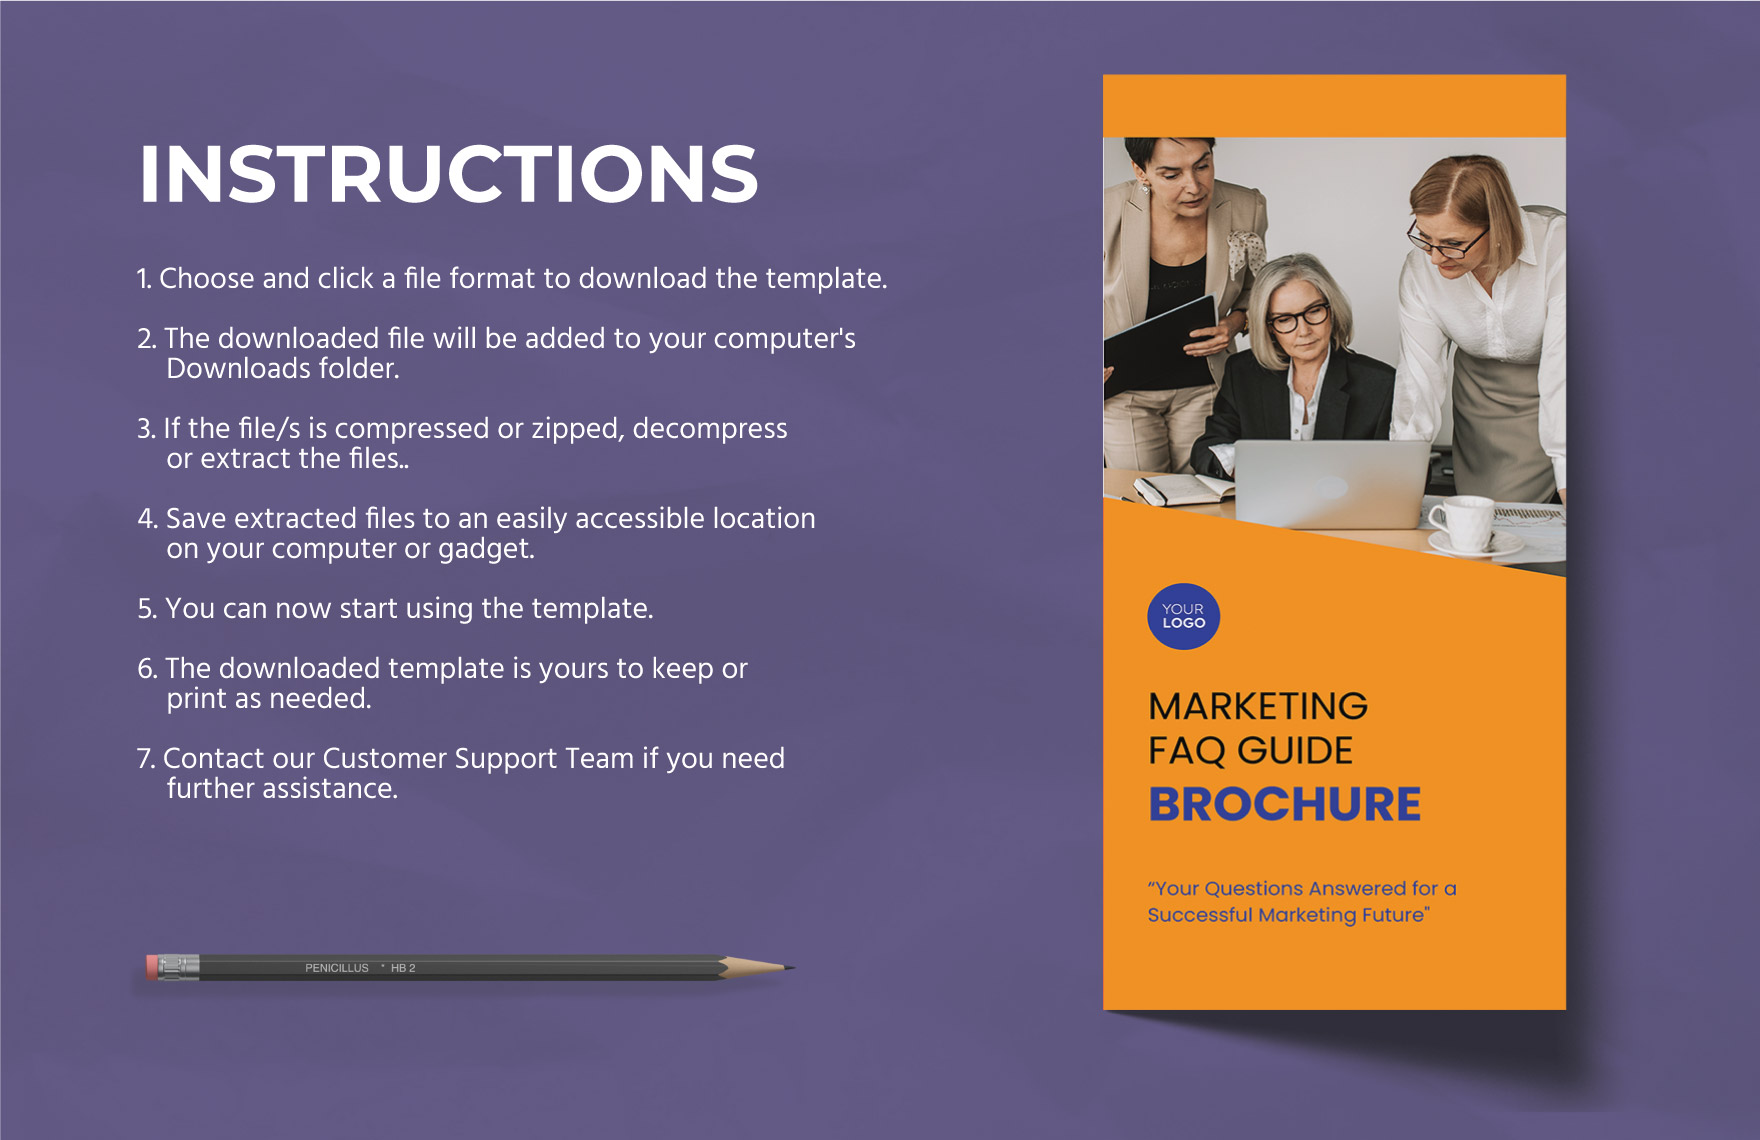 Marketing FAQ Guide Brochure Template